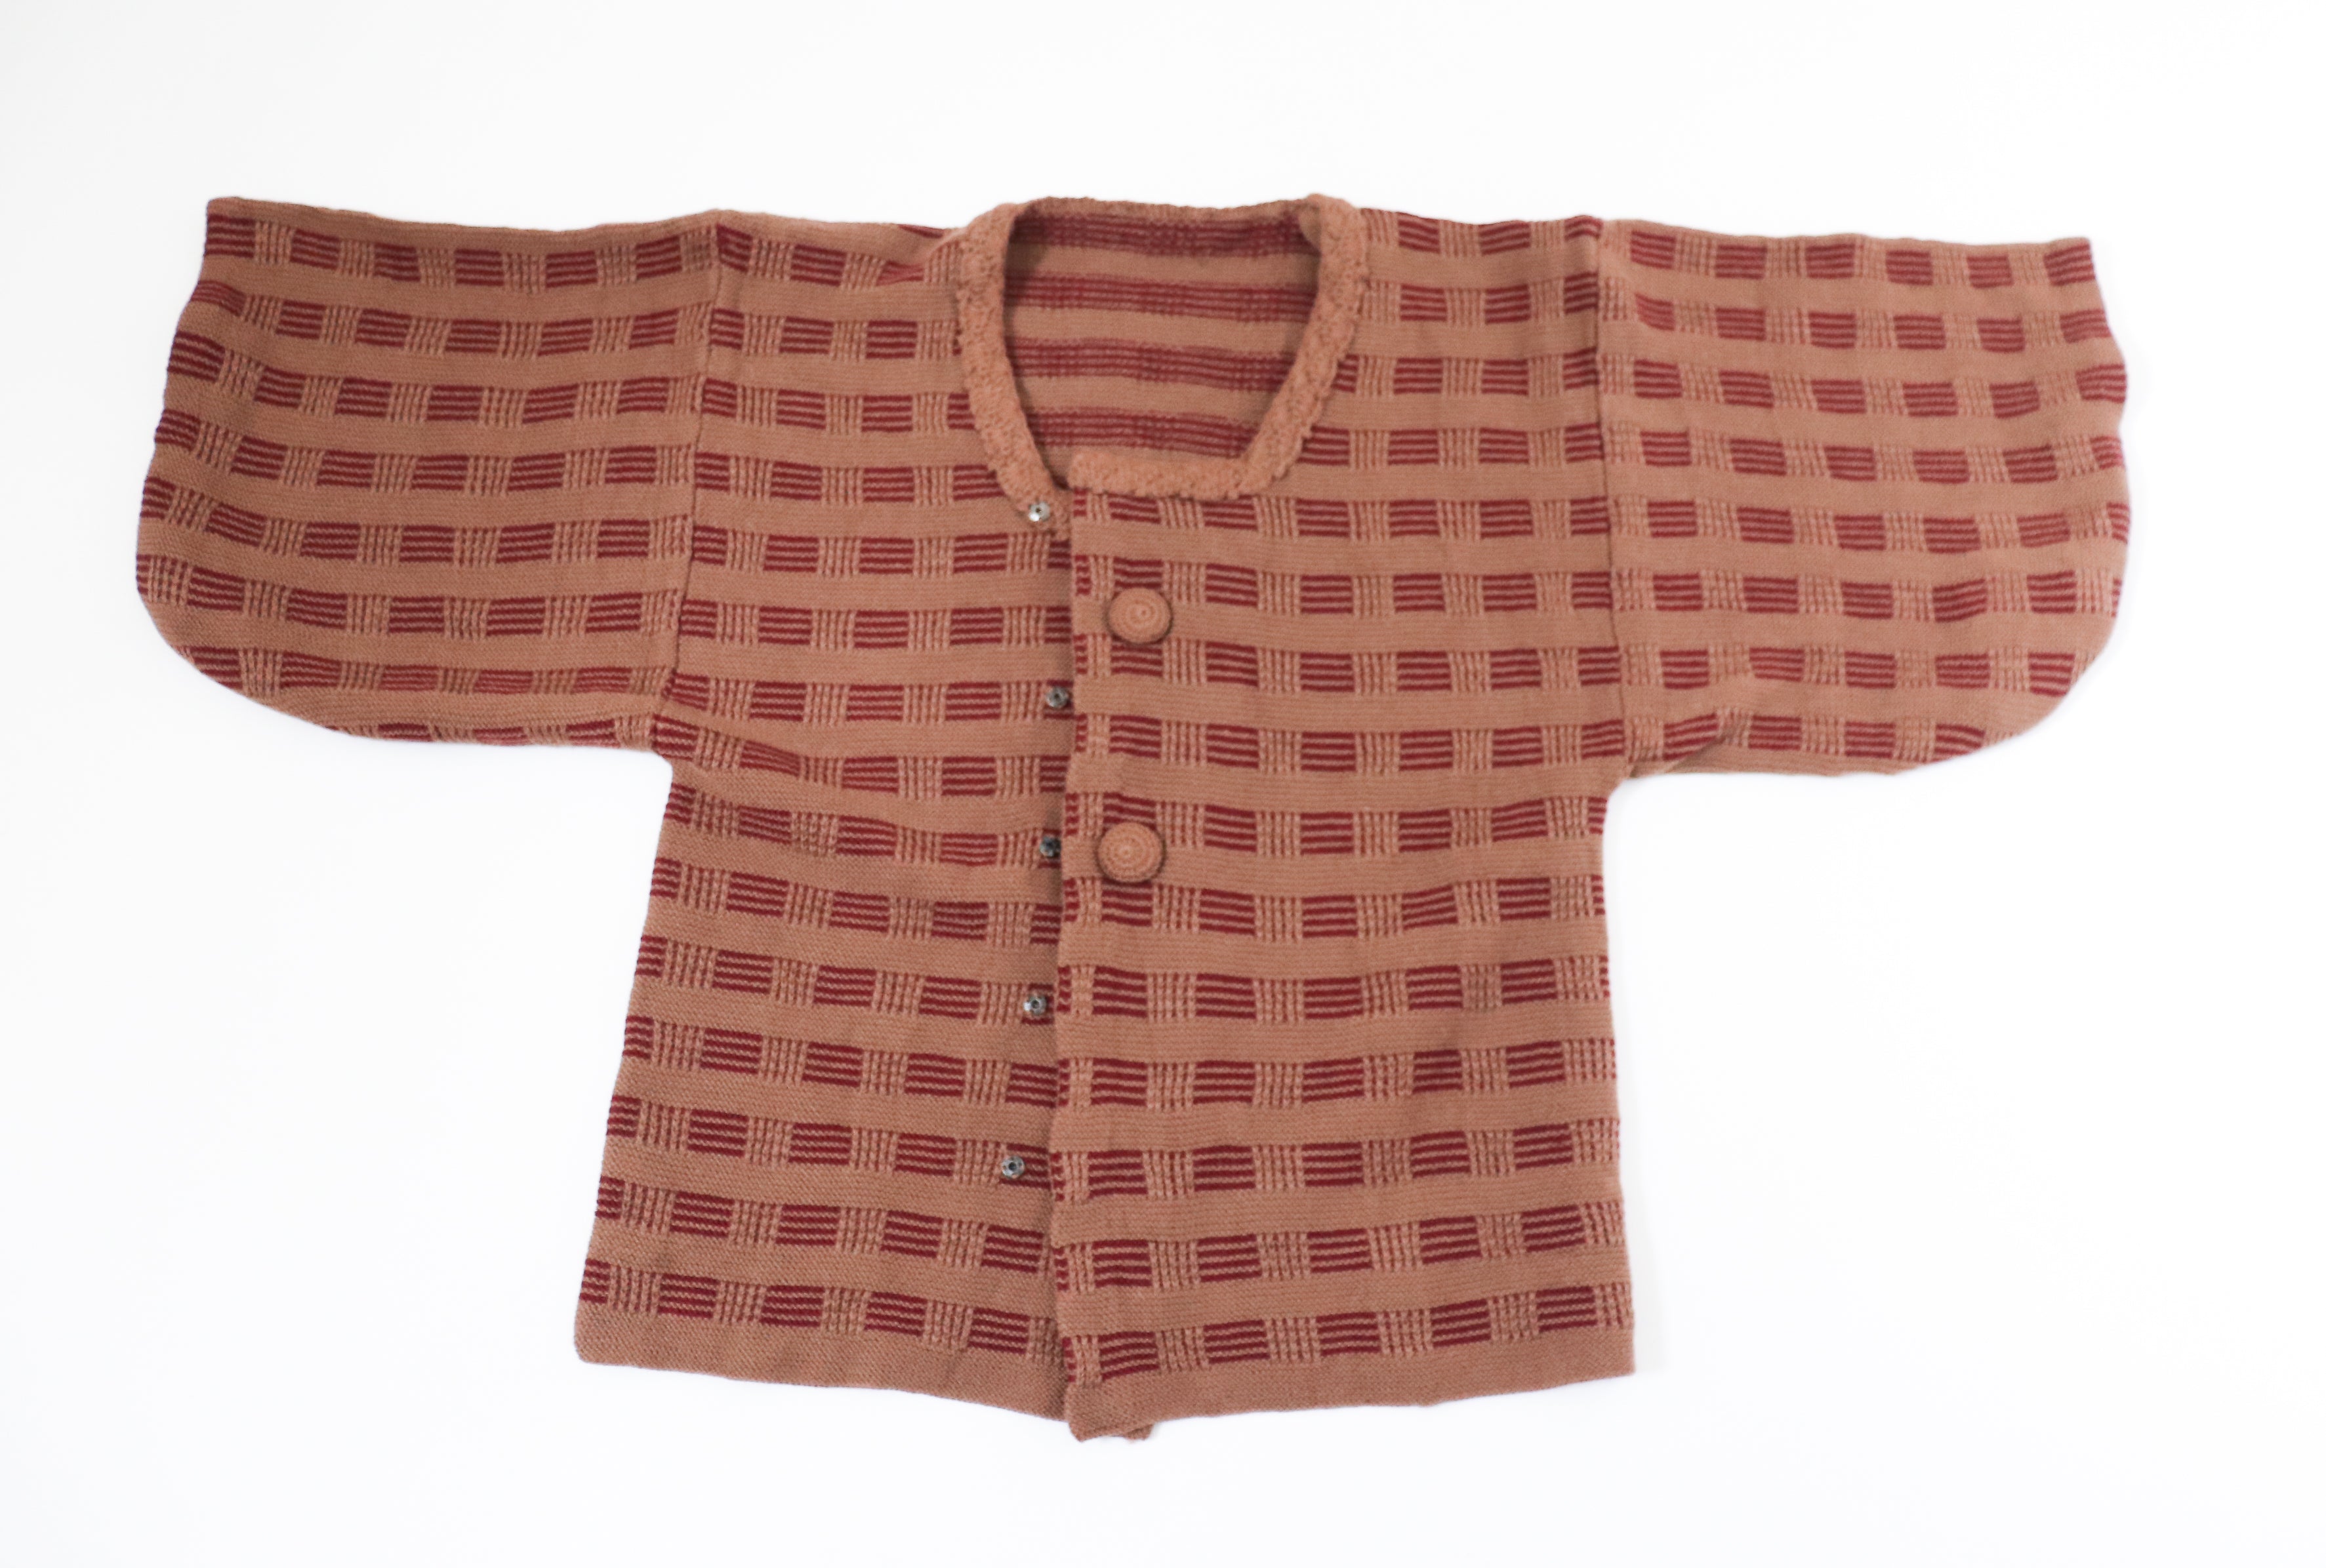 Vintage Kimono Cardigan - Hand Knitted Brown Wool - L / XL - UK 14 / 16